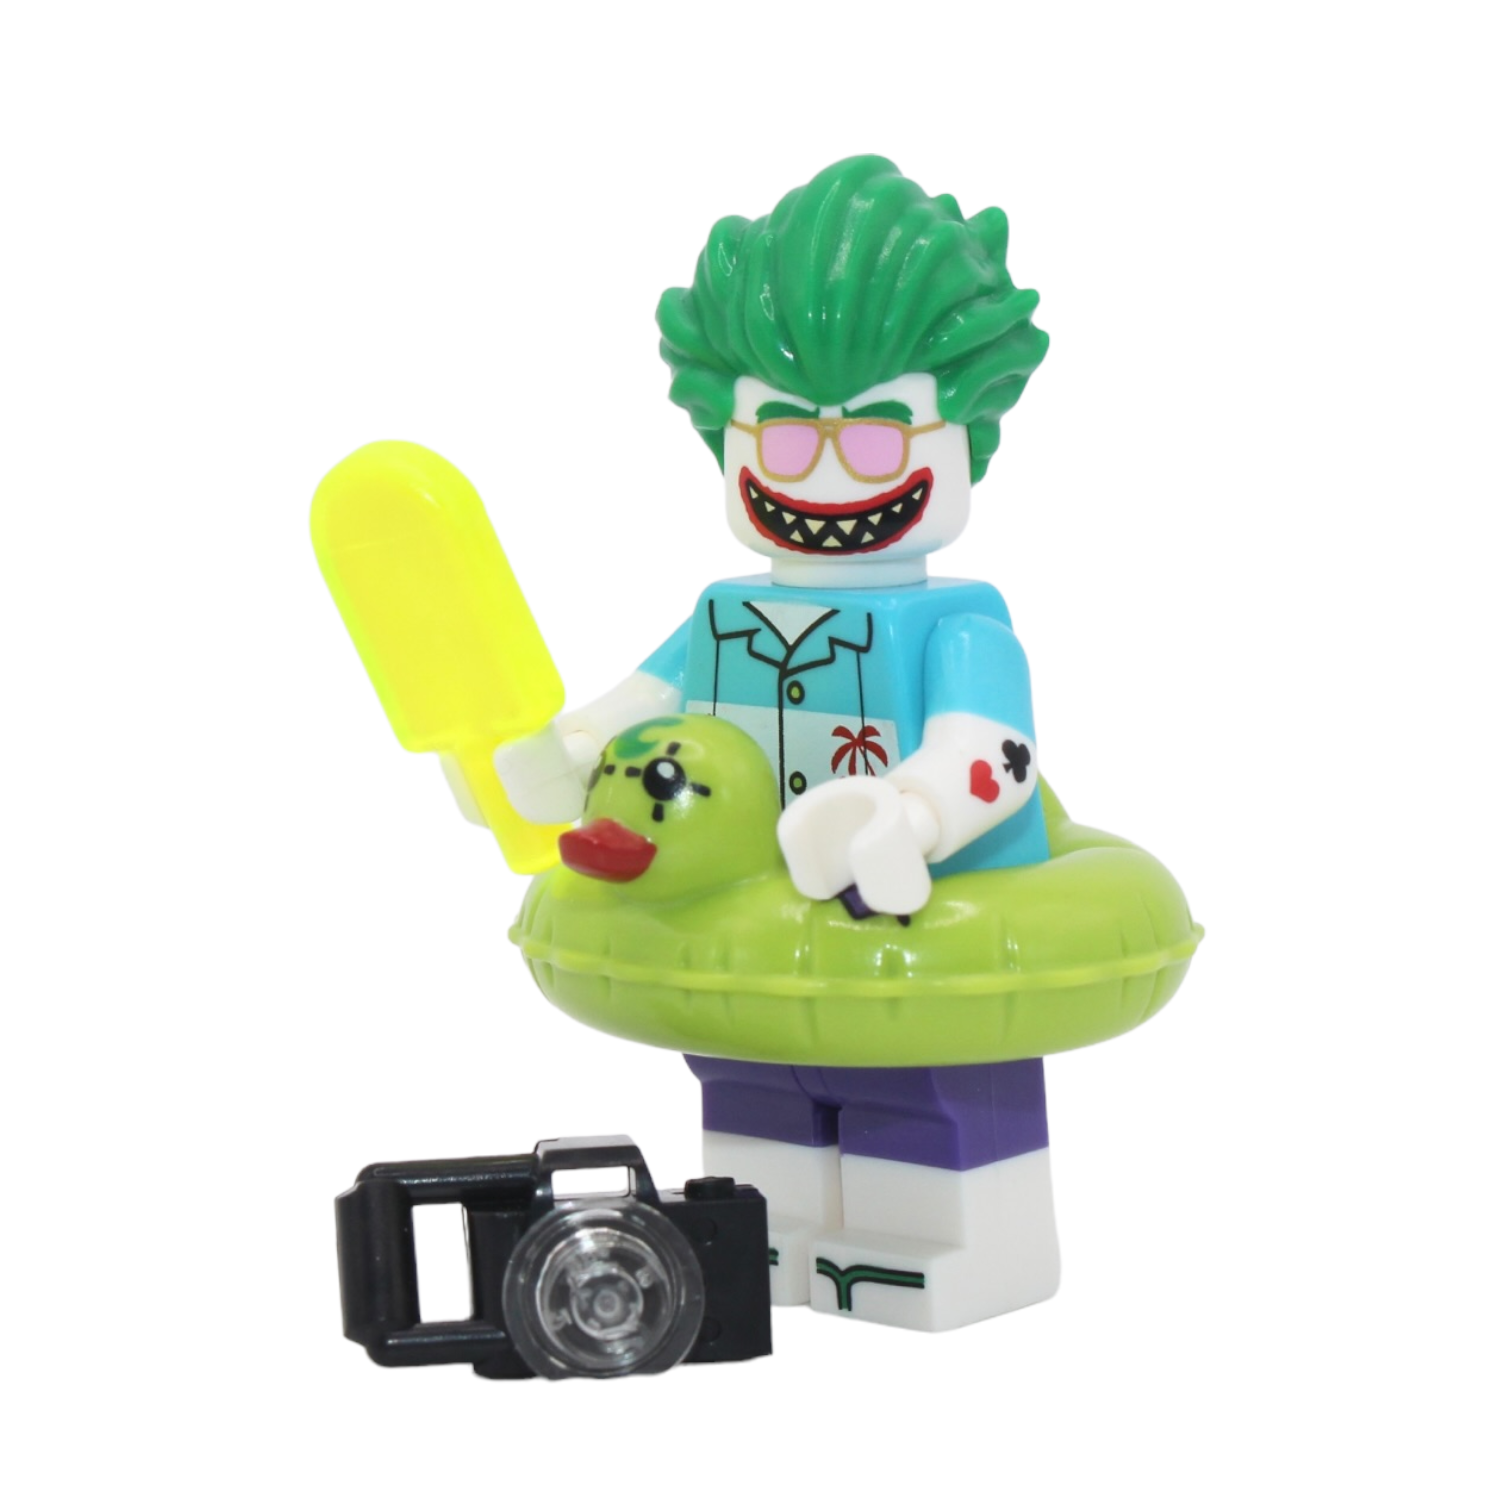 The LEGO Batman Movie Series 2: Vacation Joker